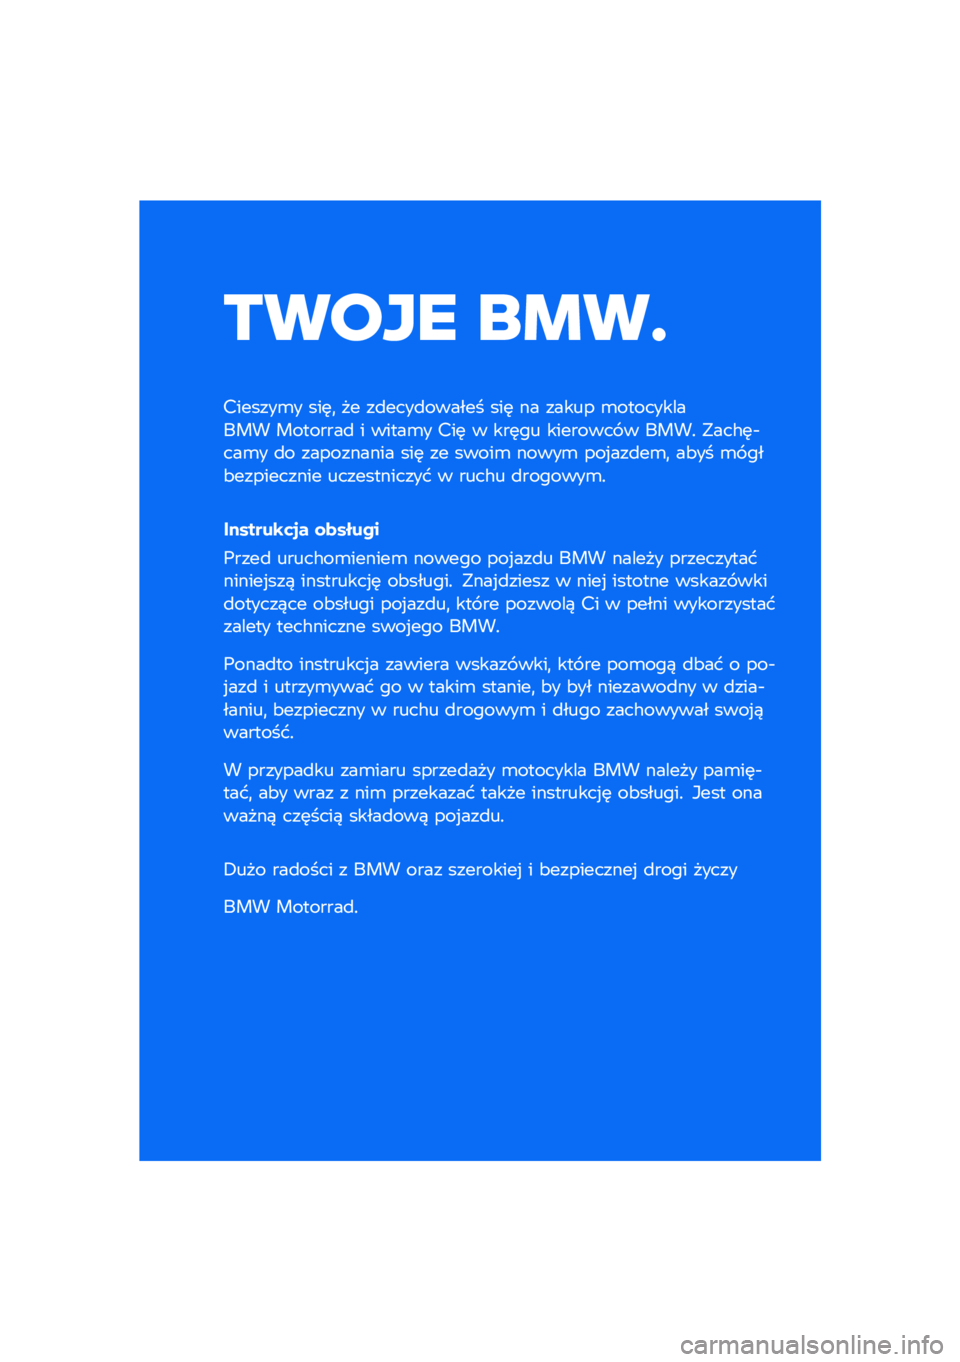 BMW MOTORRAD C 400 GT 2021  Instrukcja obsługi (in Polish) ����� ��\b��	
�������\b� ���	�
 �� ��
����
������ ���	 �� ����� �\b����������� ��������
 � �����\b� ���	 � ���	�� �������� �